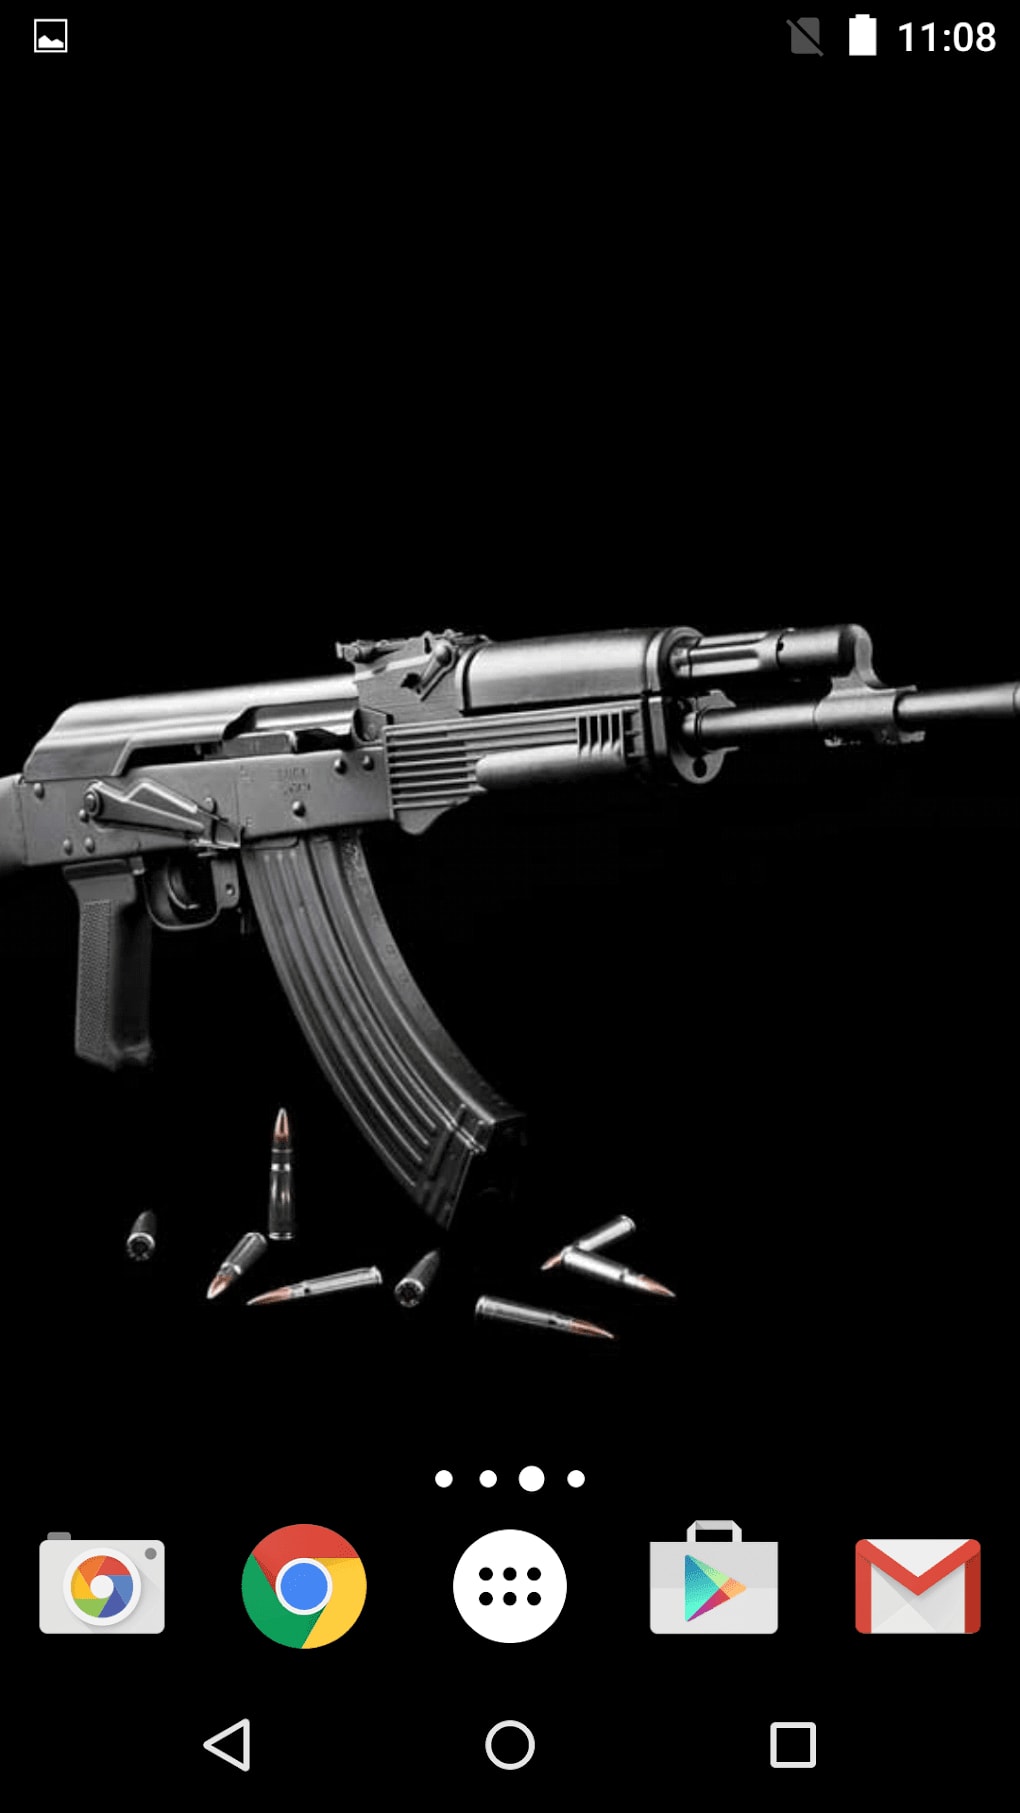 AK47 gun bag knife weapon 1080x1920 iPhone 8766S Plus wallpaper  background picture image